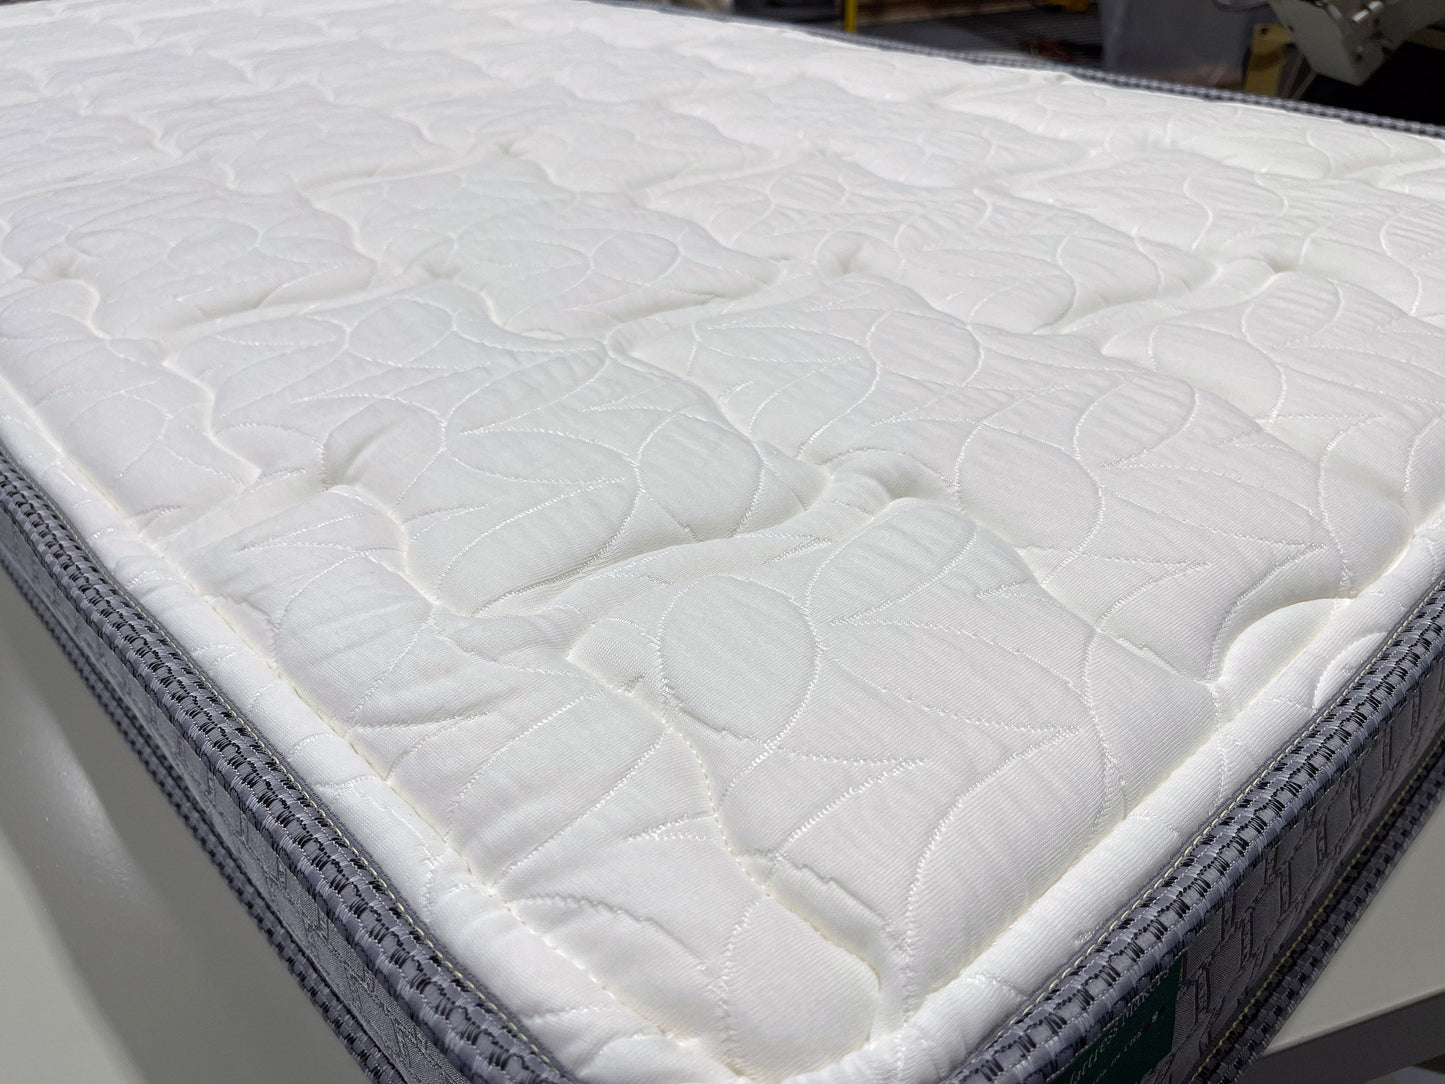 Largo 8" - 34" x 72" mattress